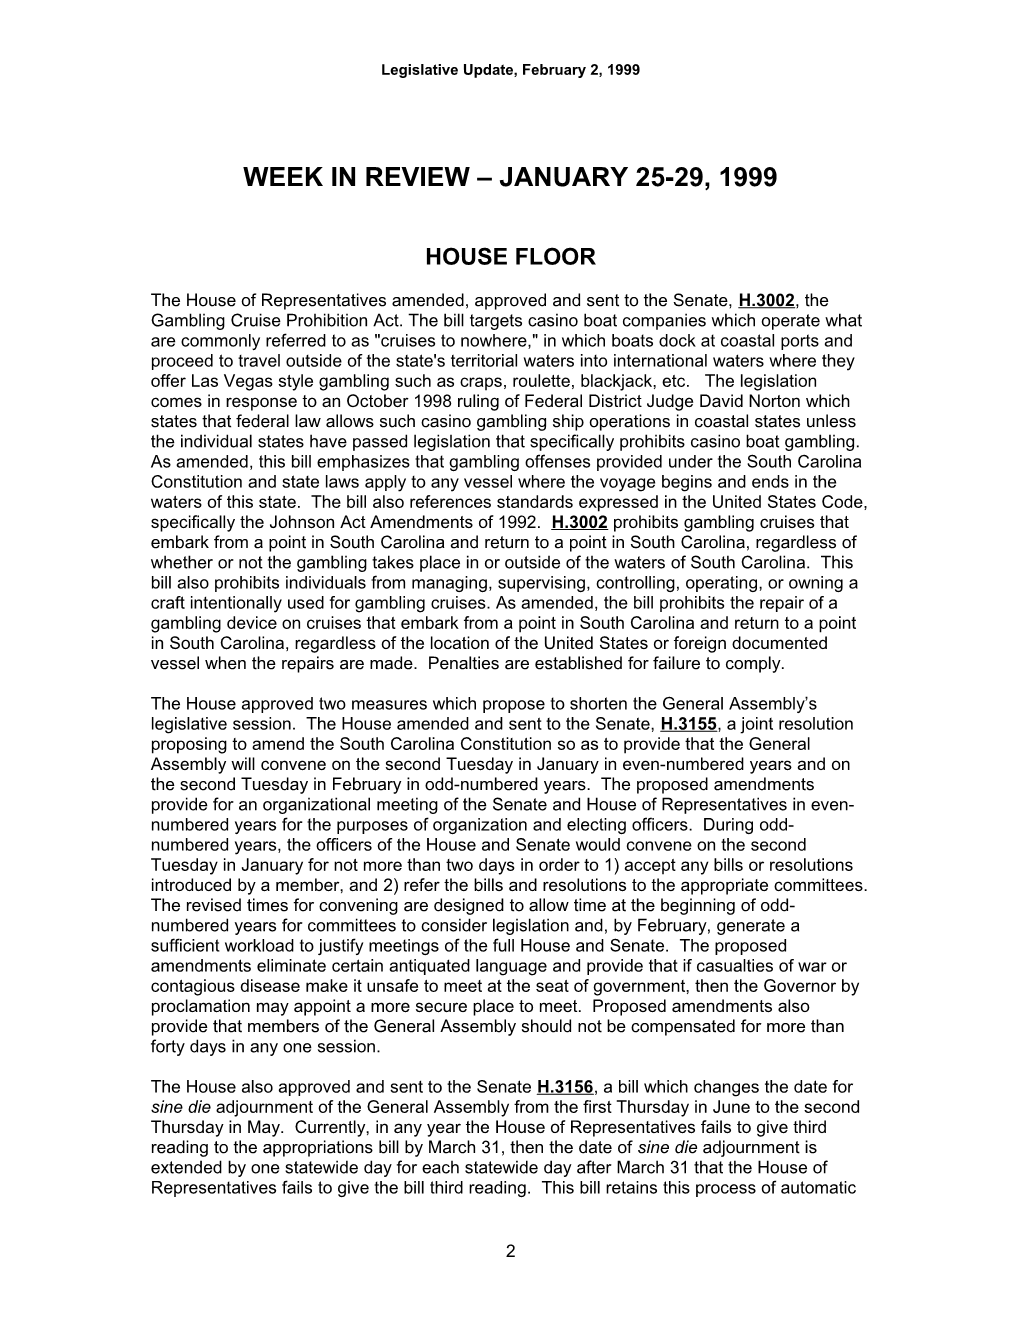 Legislative Update - Vol. 16 No. 04 February 2, 1999 - South Carolina Legislature Online